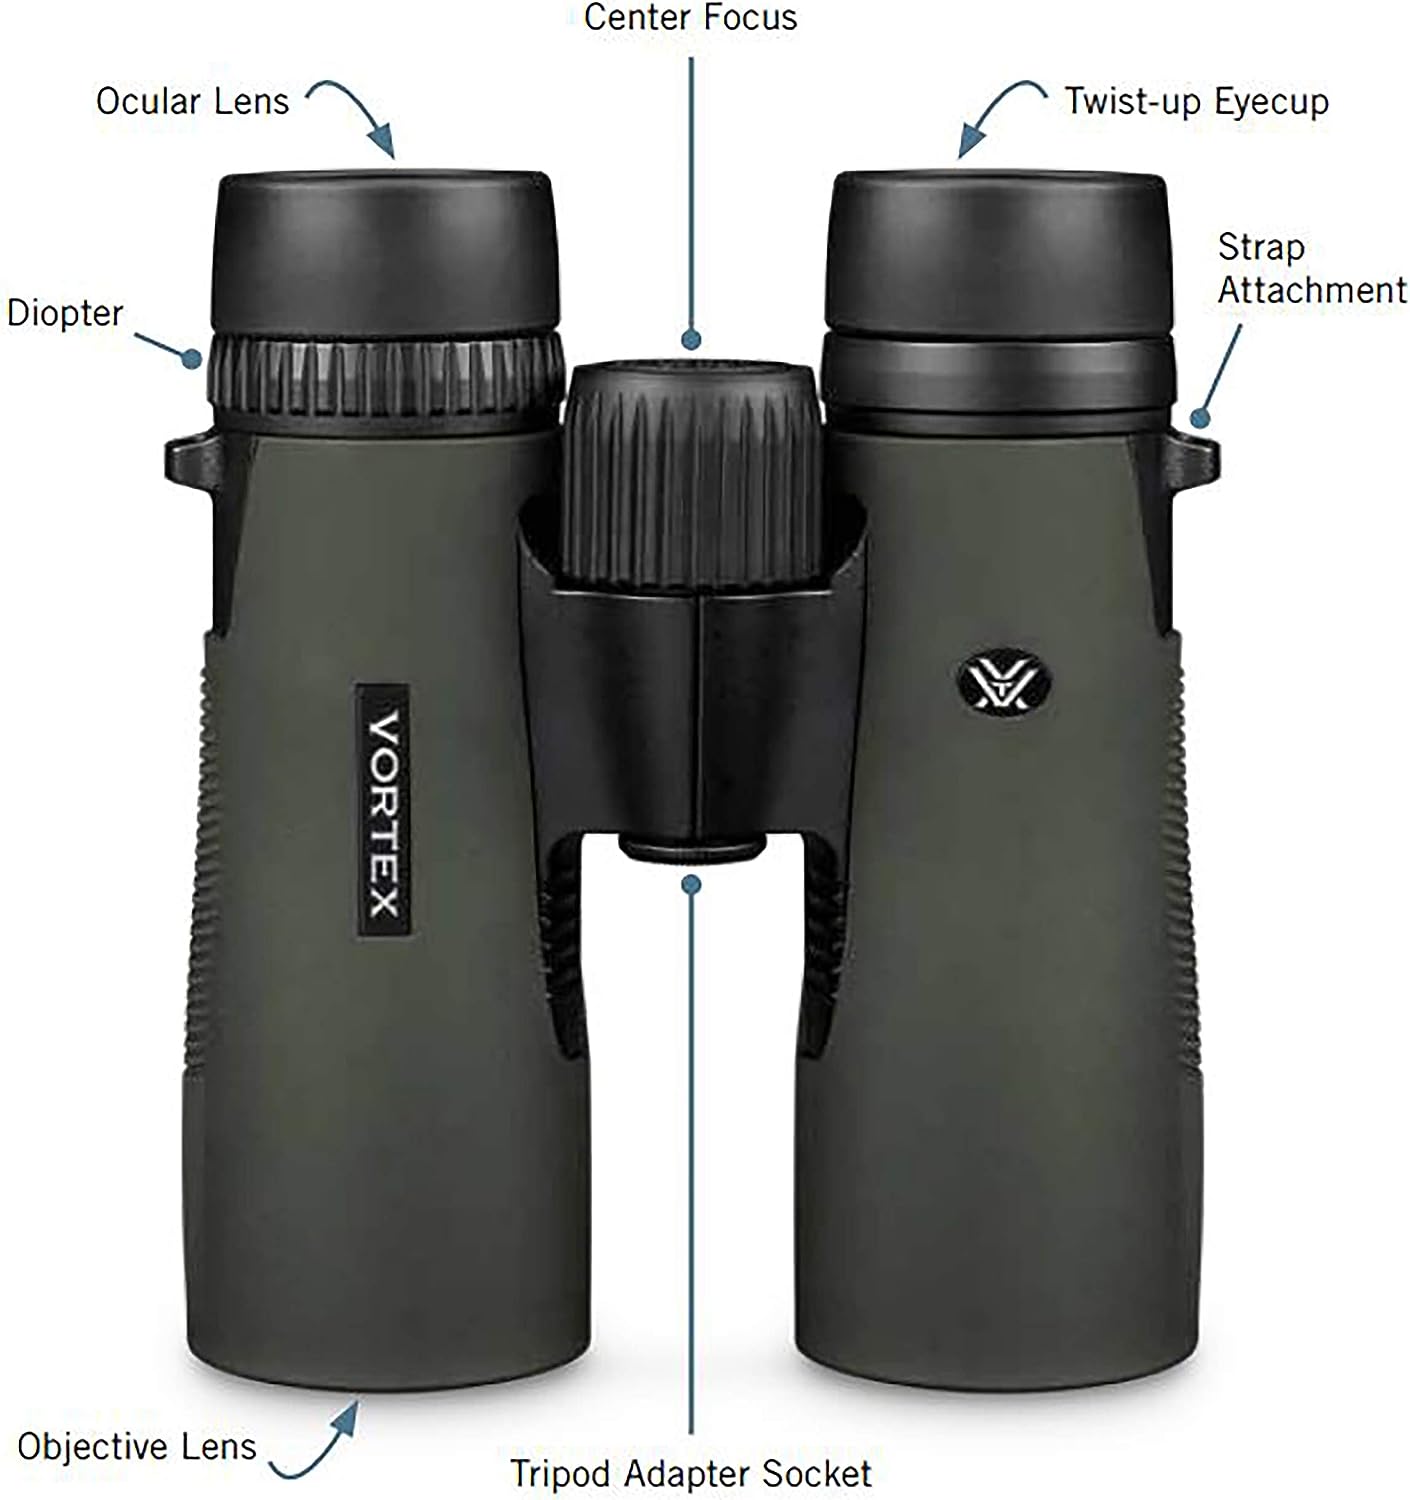 Vortex Optics Diamondback HD 8x42 Binoculars